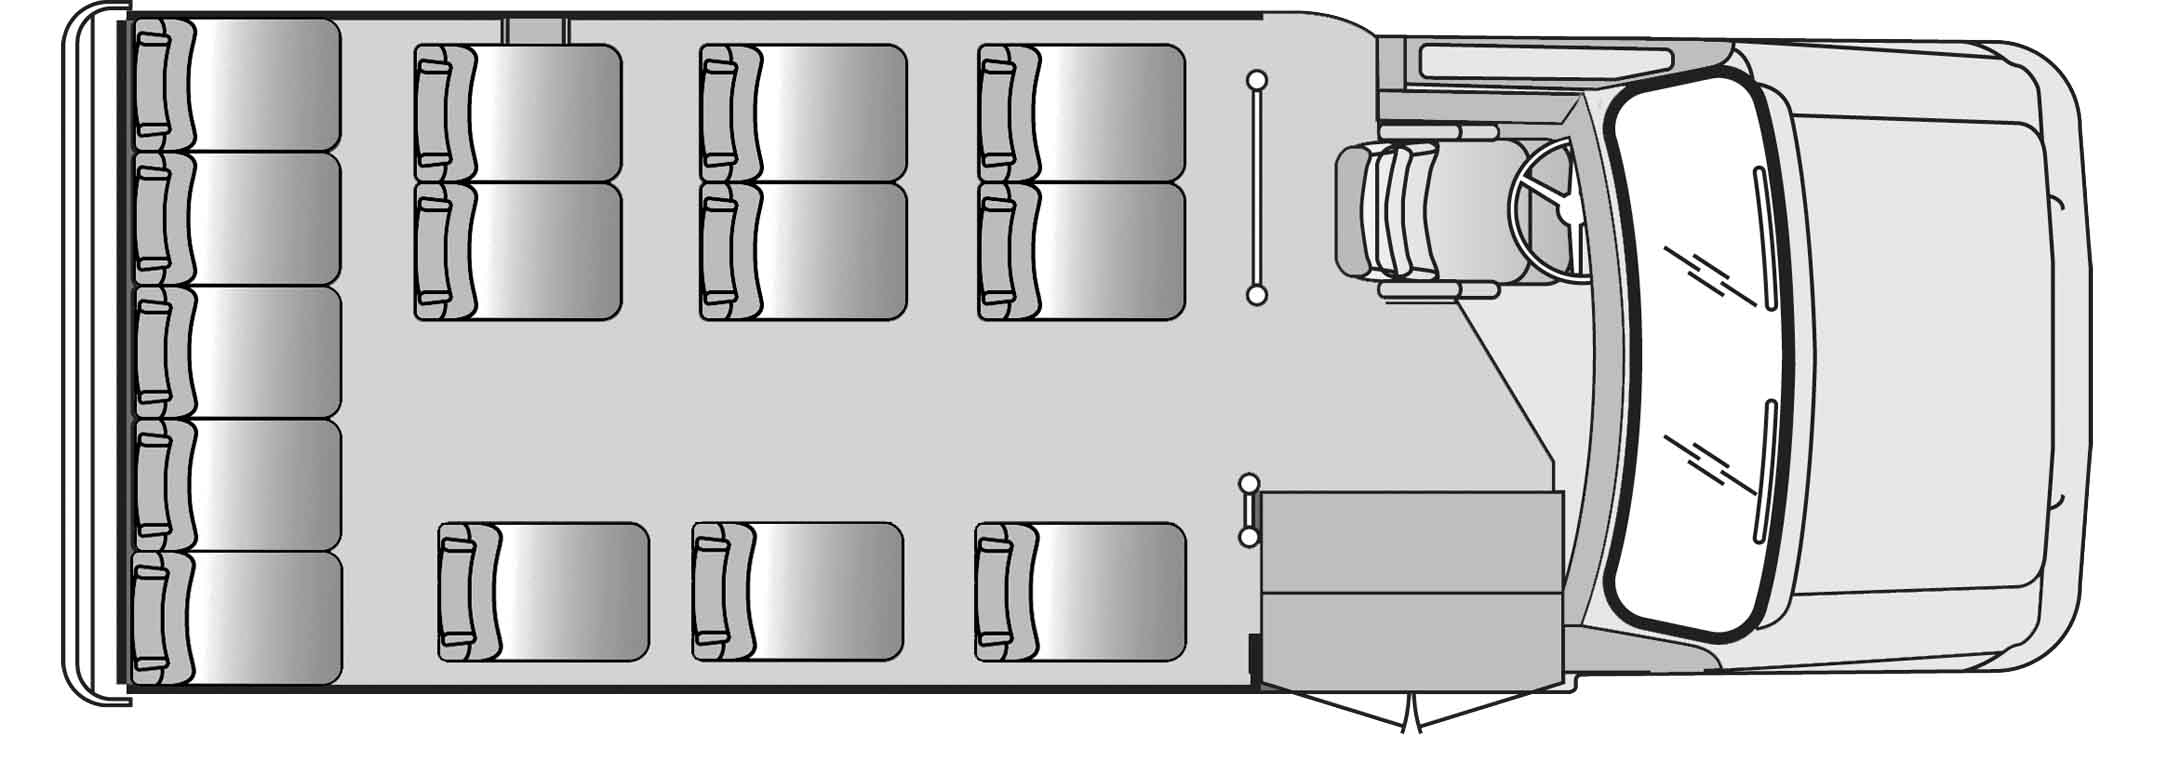 14 Passenger Plus Driver Floorplan Image